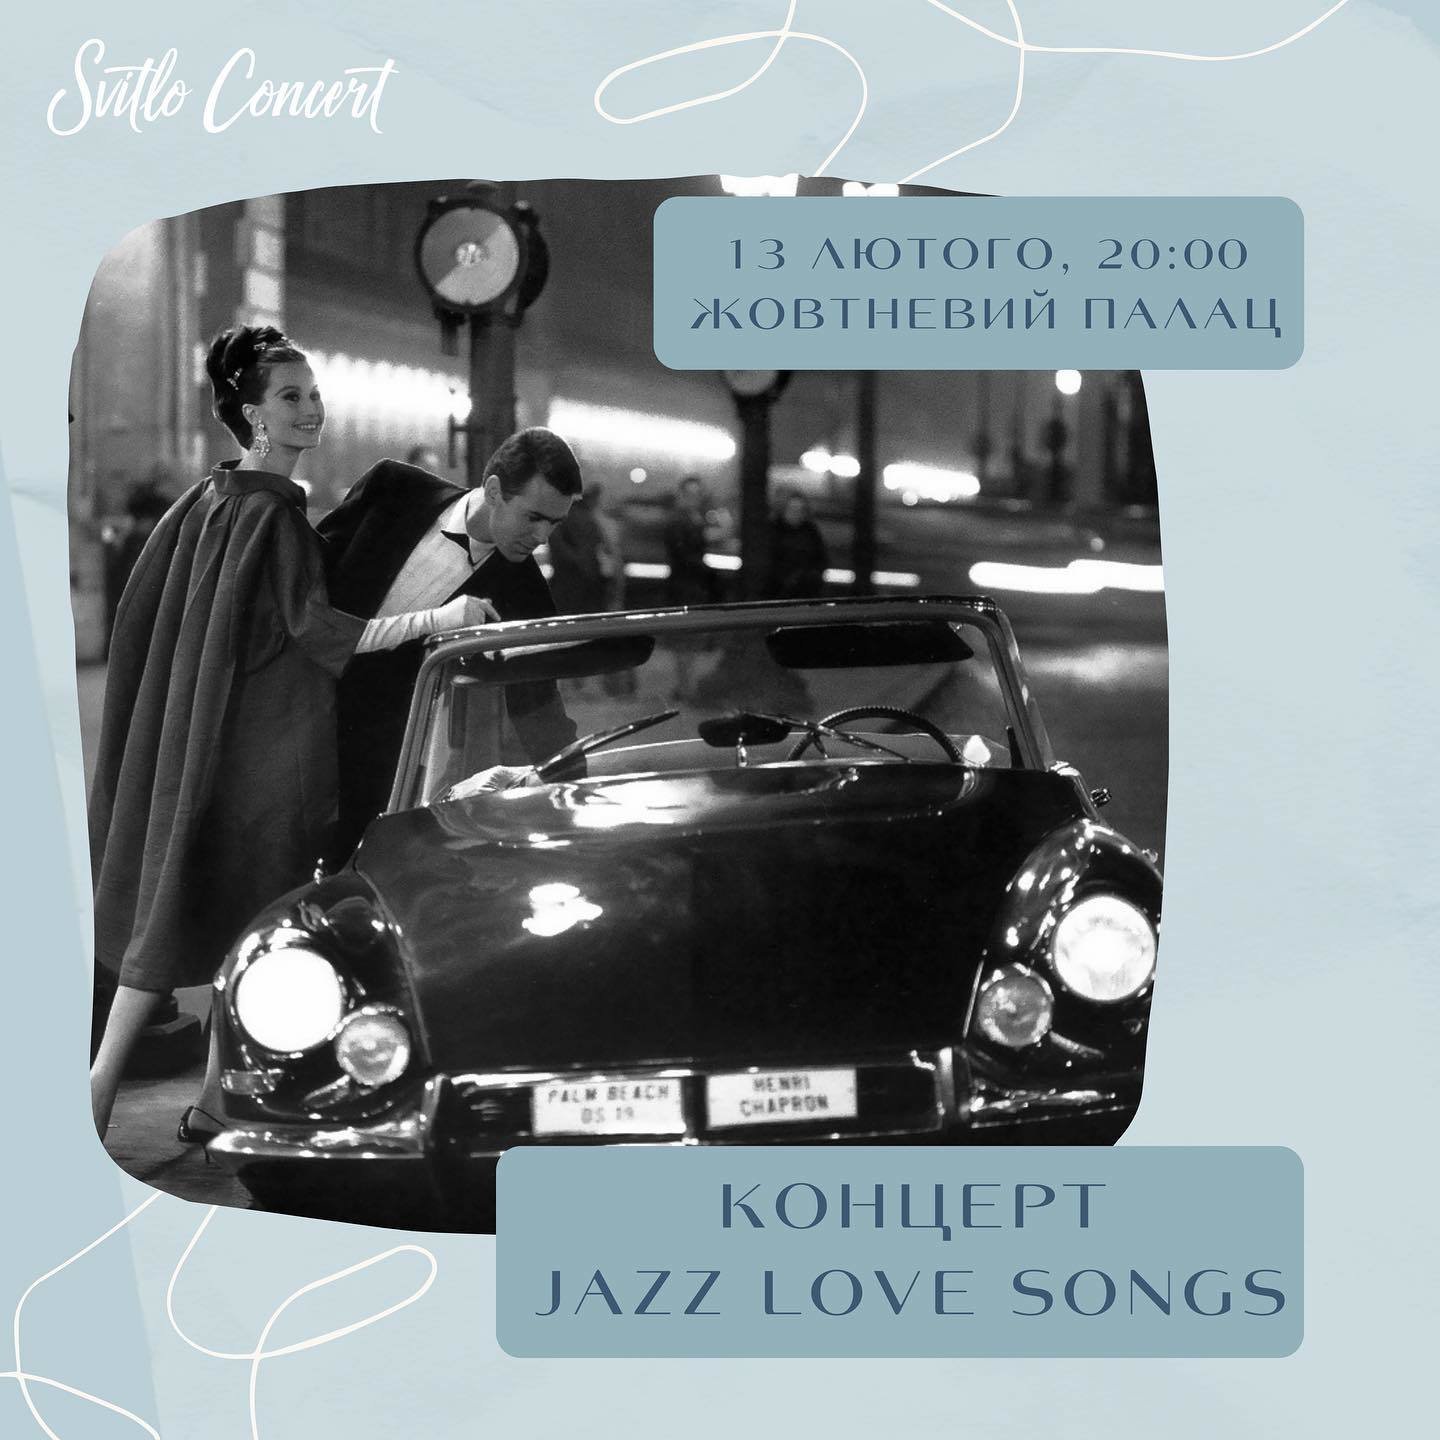 Вечер джаза "Jazz Love Songs"